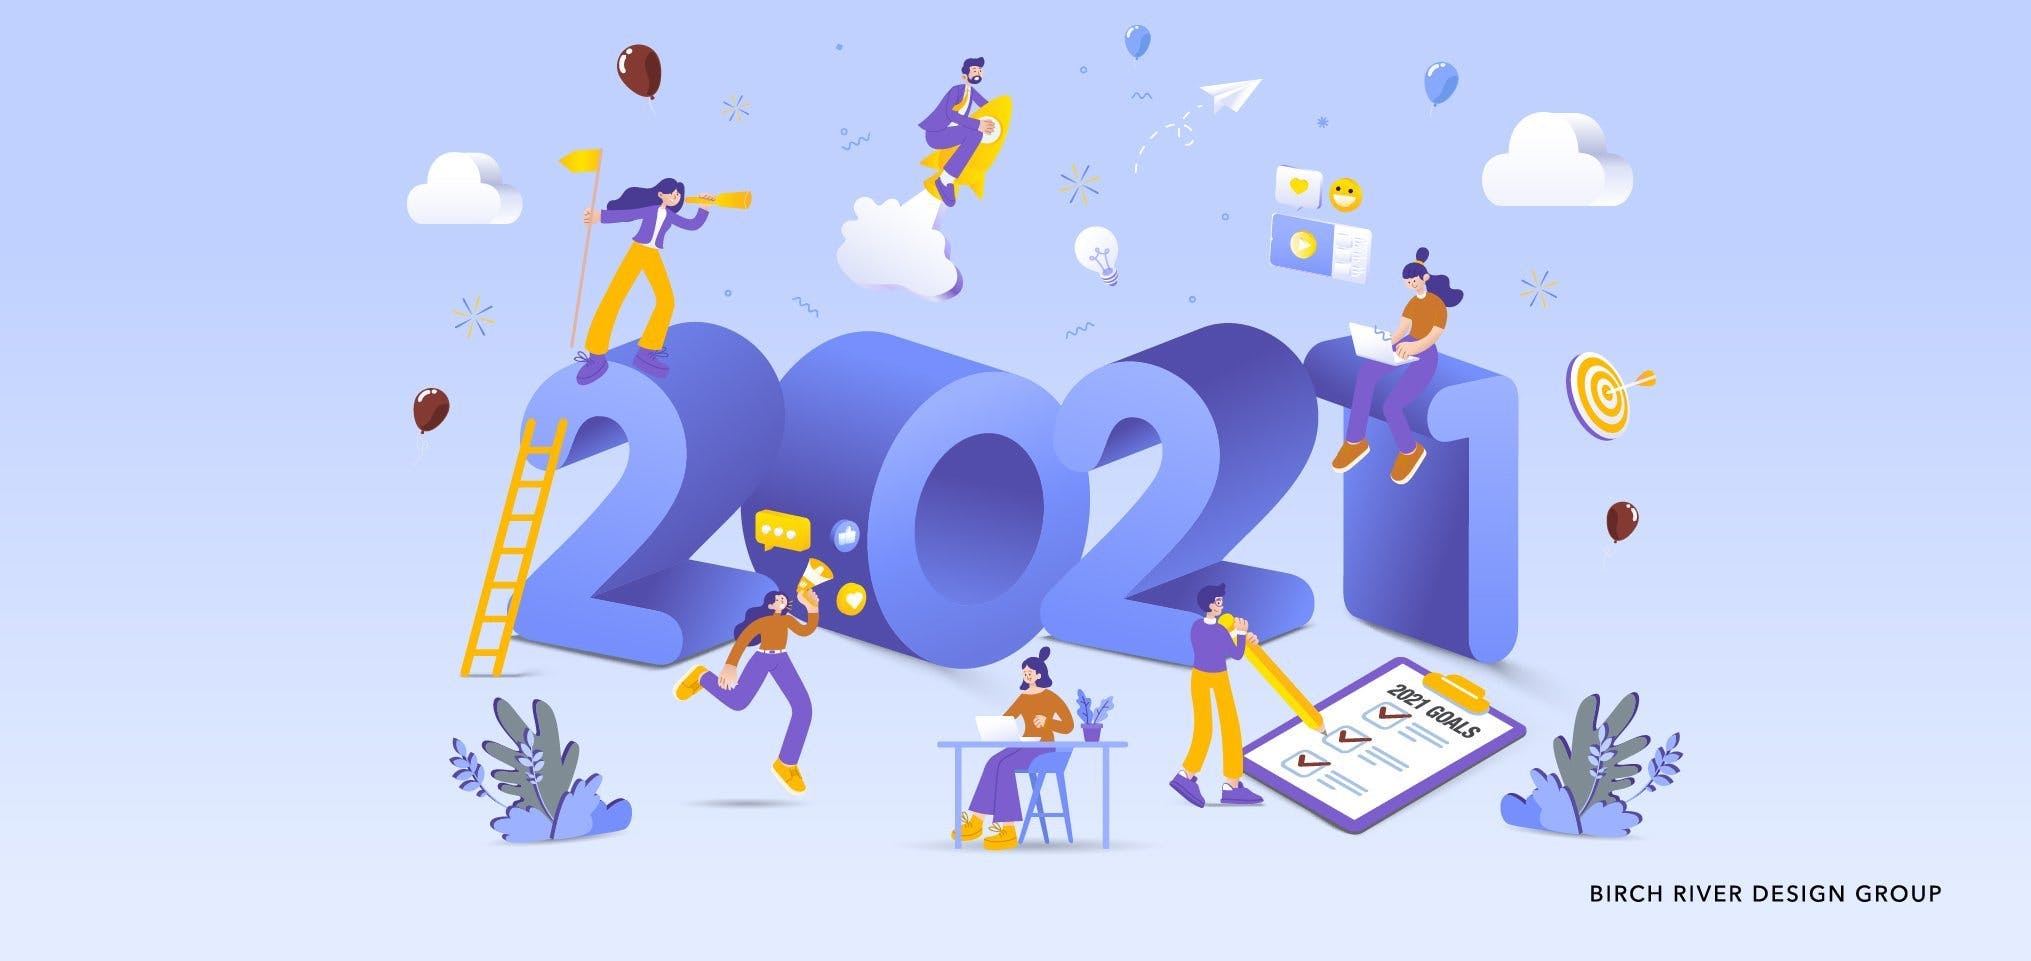 Top Digital Marketing Trends for 2021